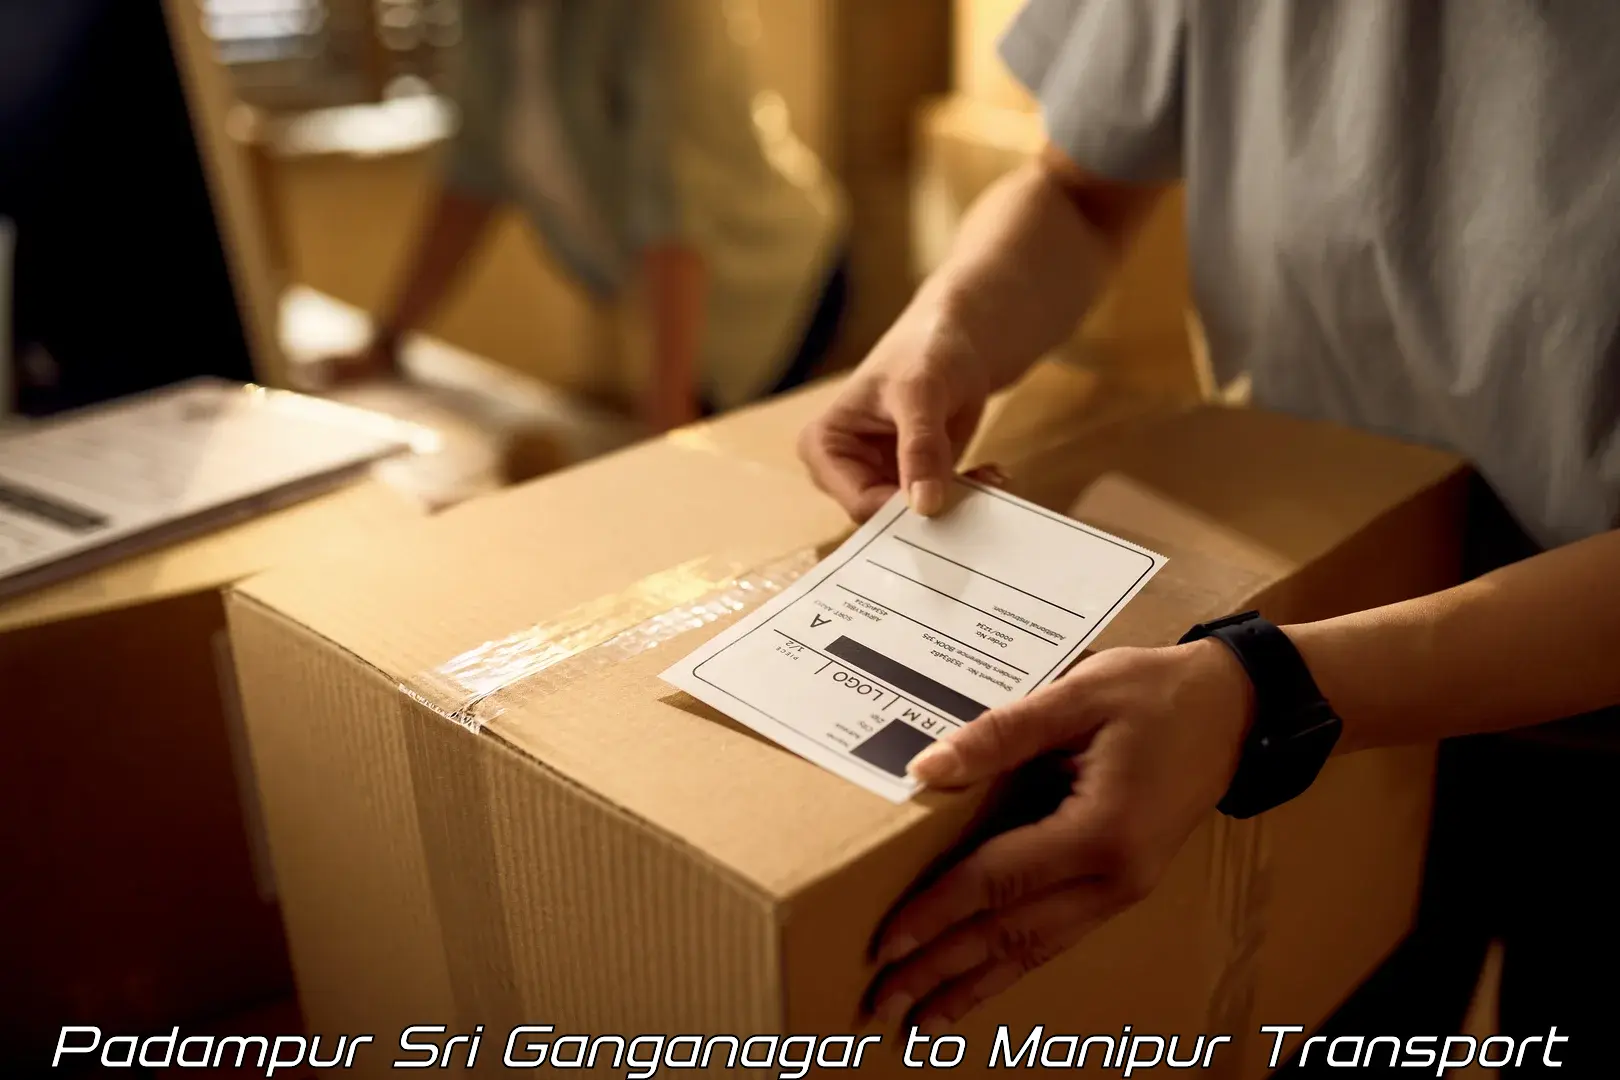 Vehicle courier services Padampur Sri Ganganagar to Manipur